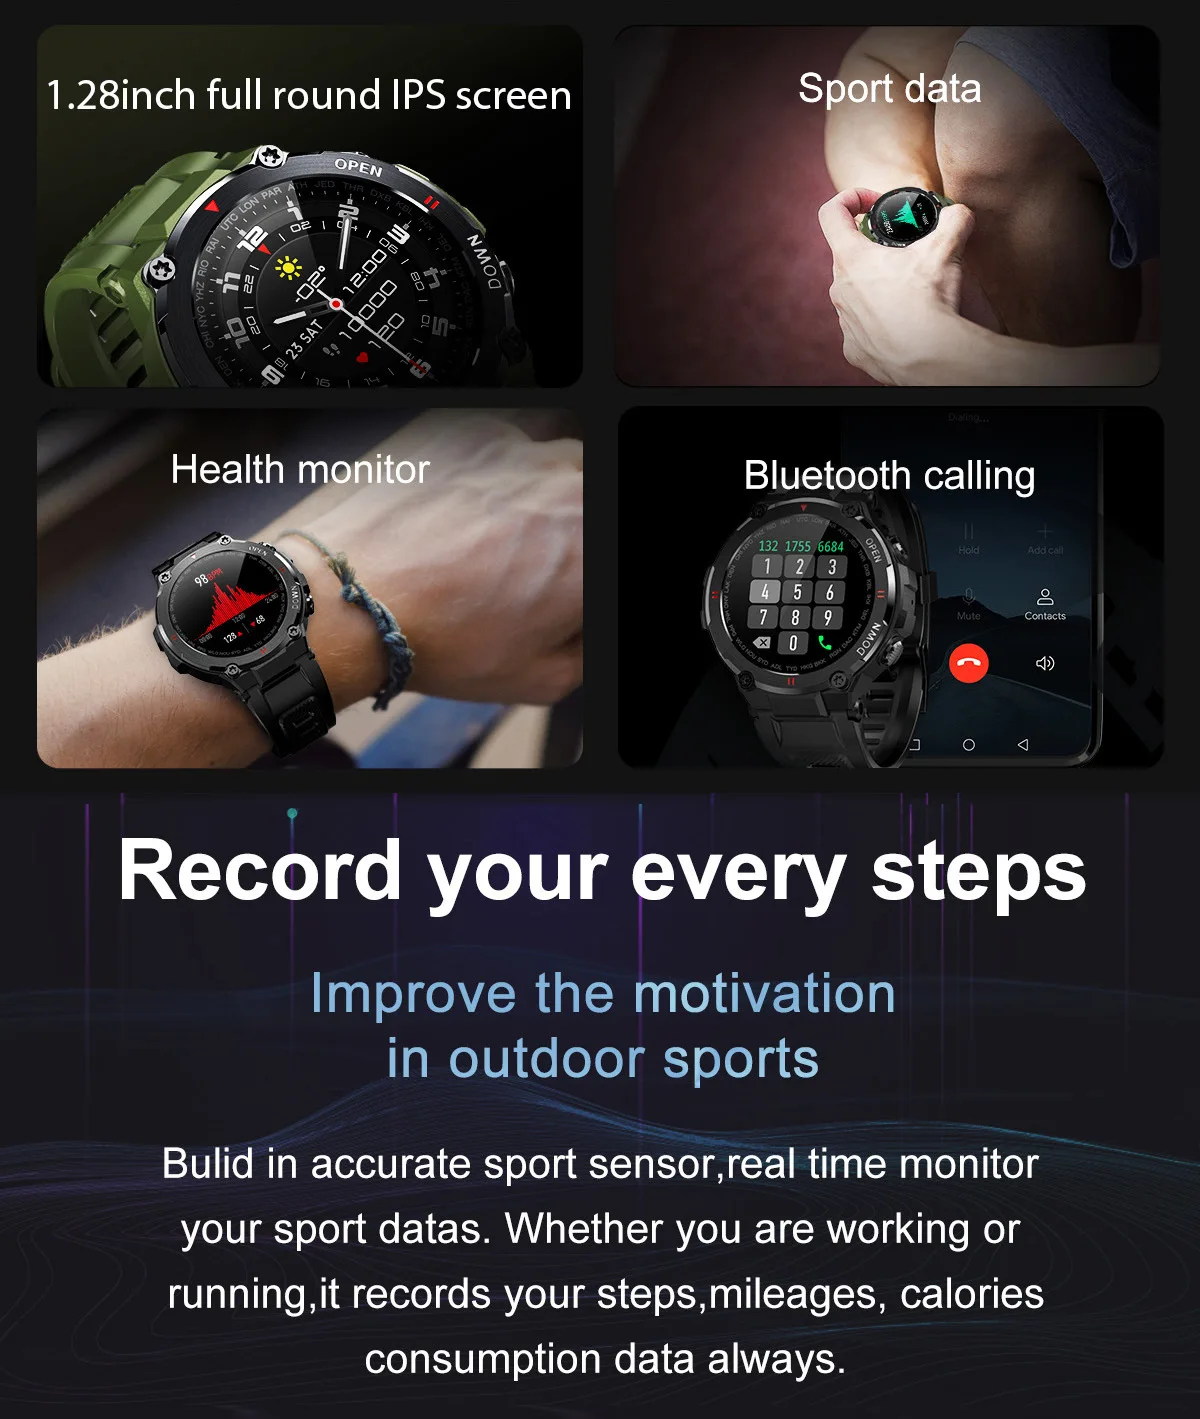 Best sales reloj intelligent smart watch phone calling waterproof 400mAh big battery round smartwatch K22 for men